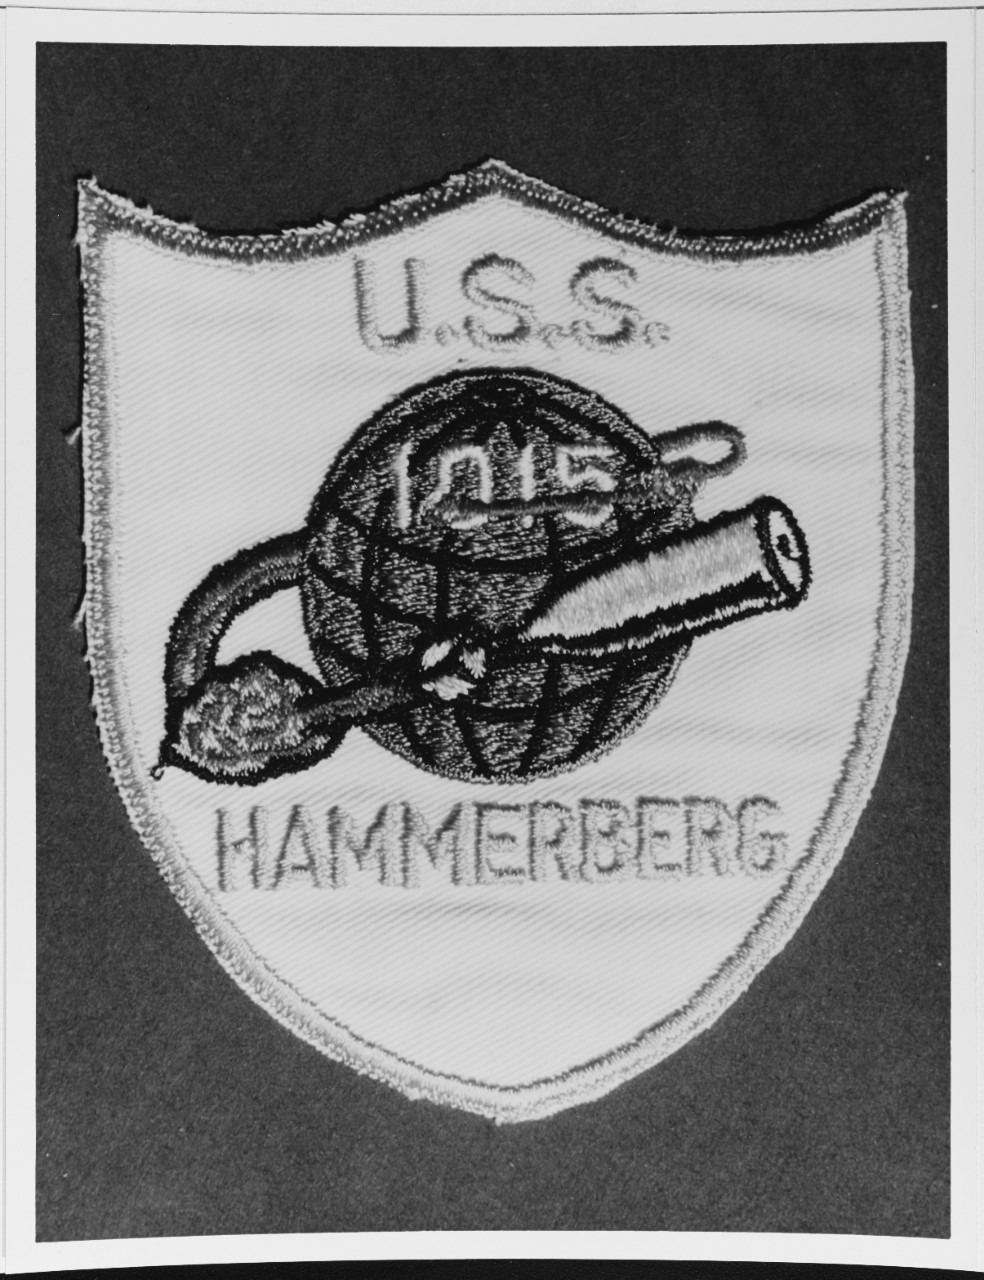 Insignia: USS HAMMERBERG (DE-1015)